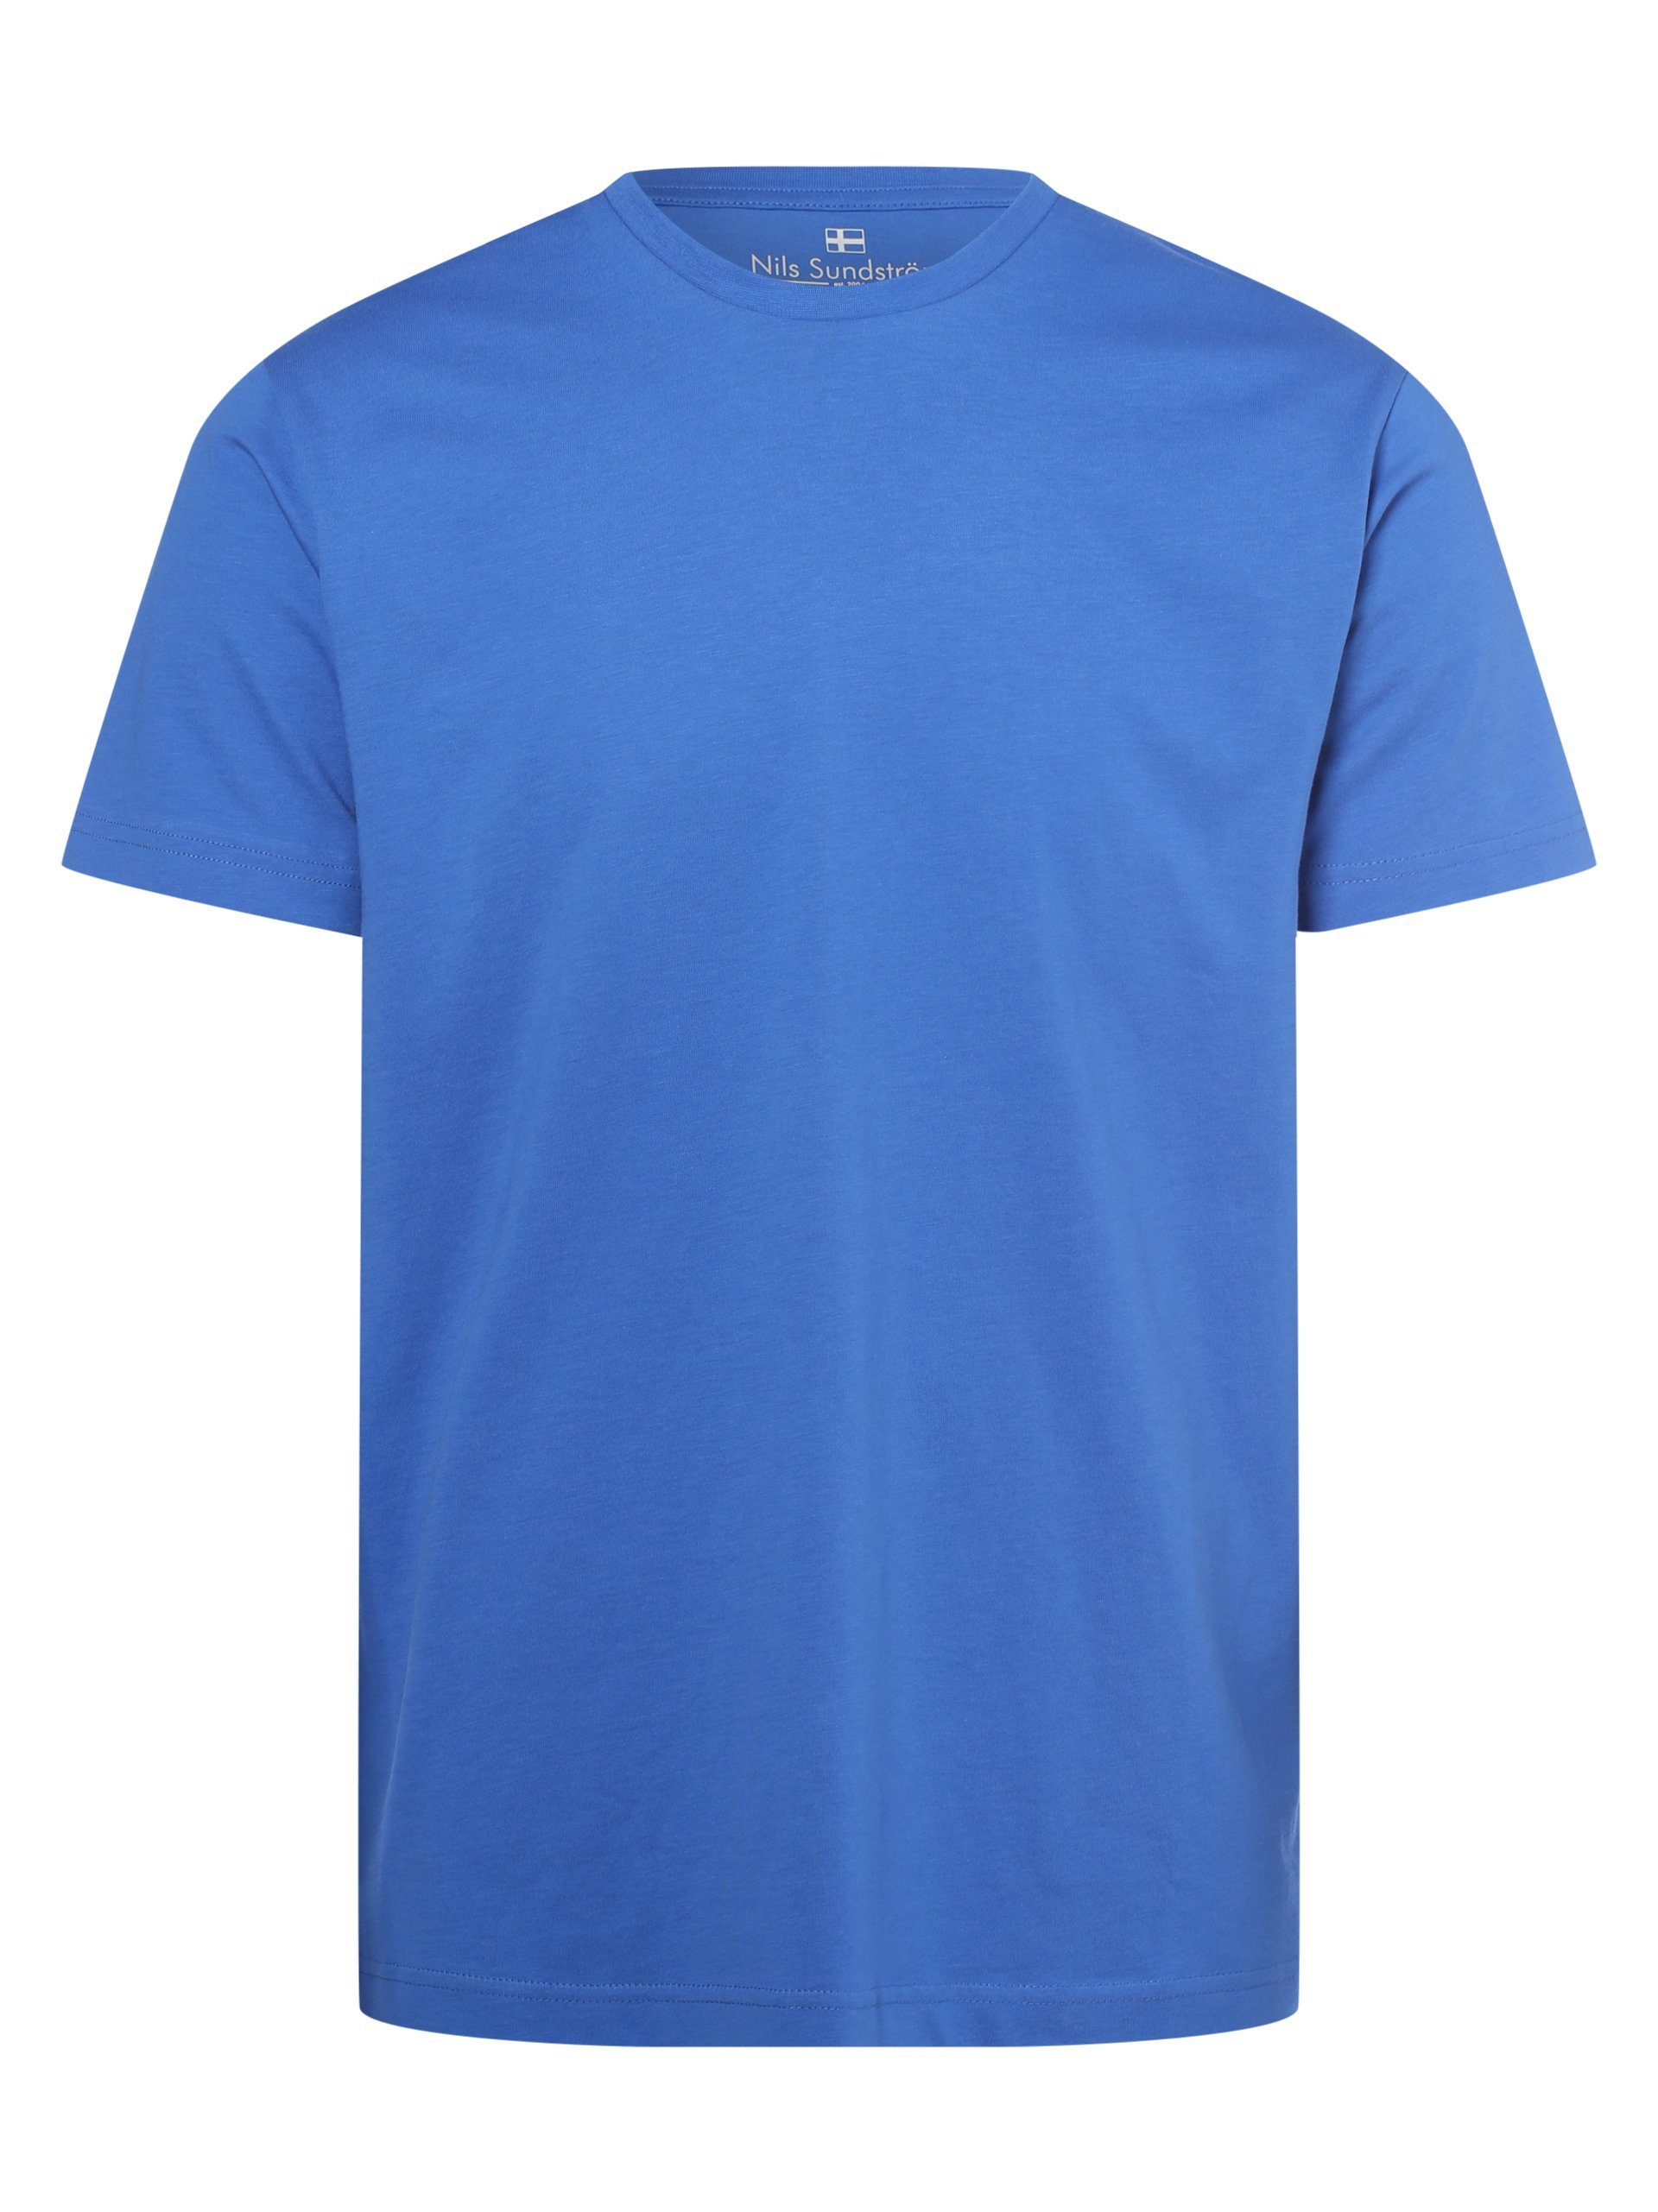 Nils Sundström T-Shirt blau | T-Shirts